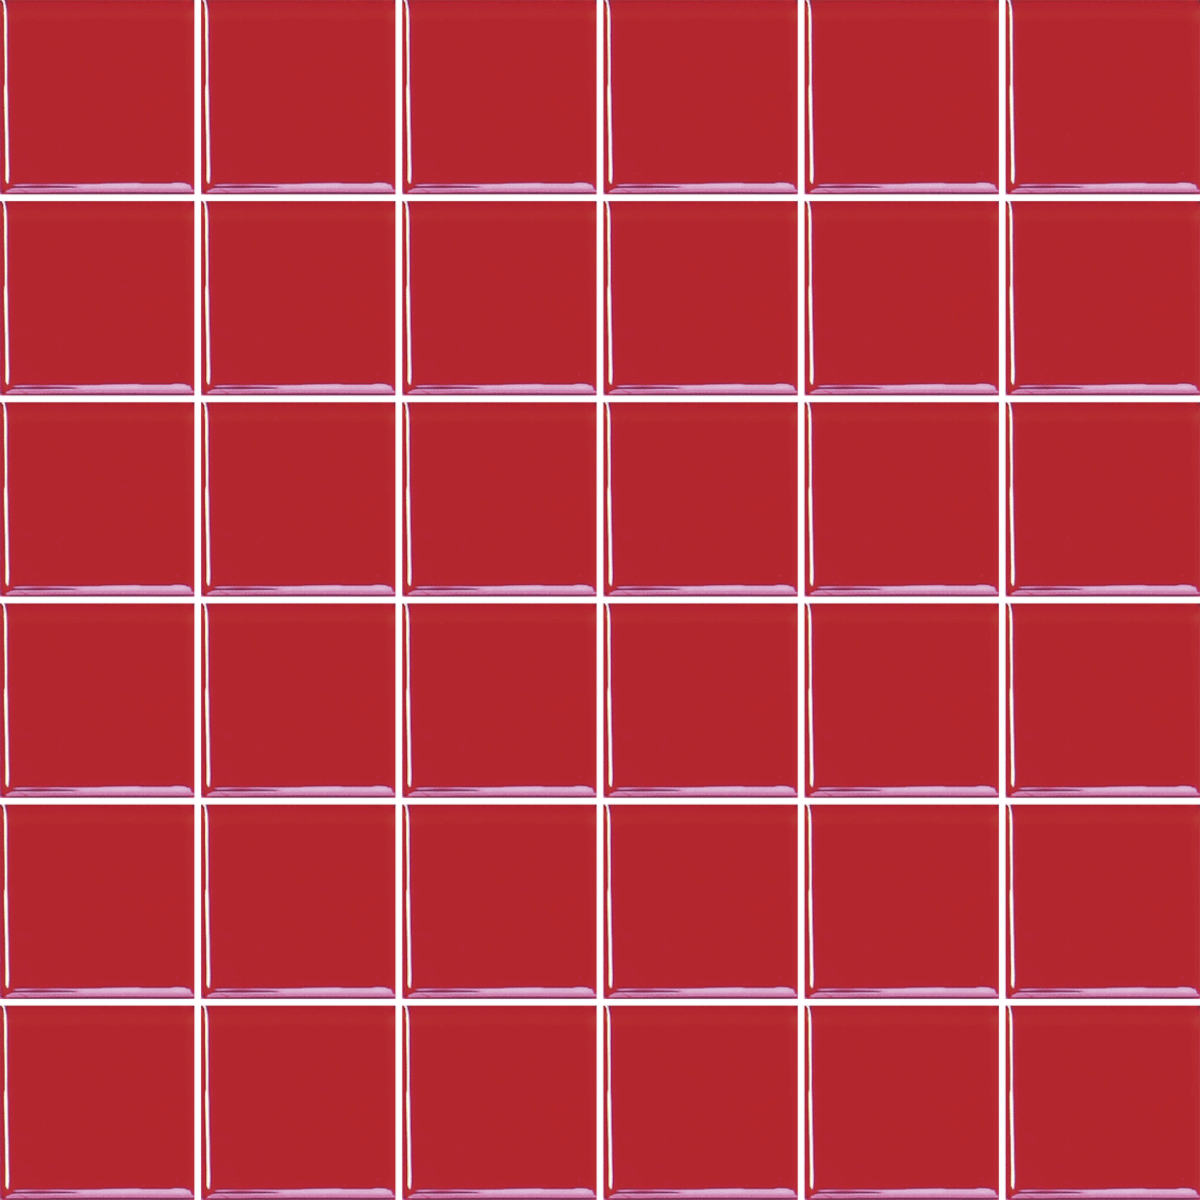 Skleněná mozaika Premium Mosaic červená 31x31 cm lesk MOS50RE Premium Mosaic